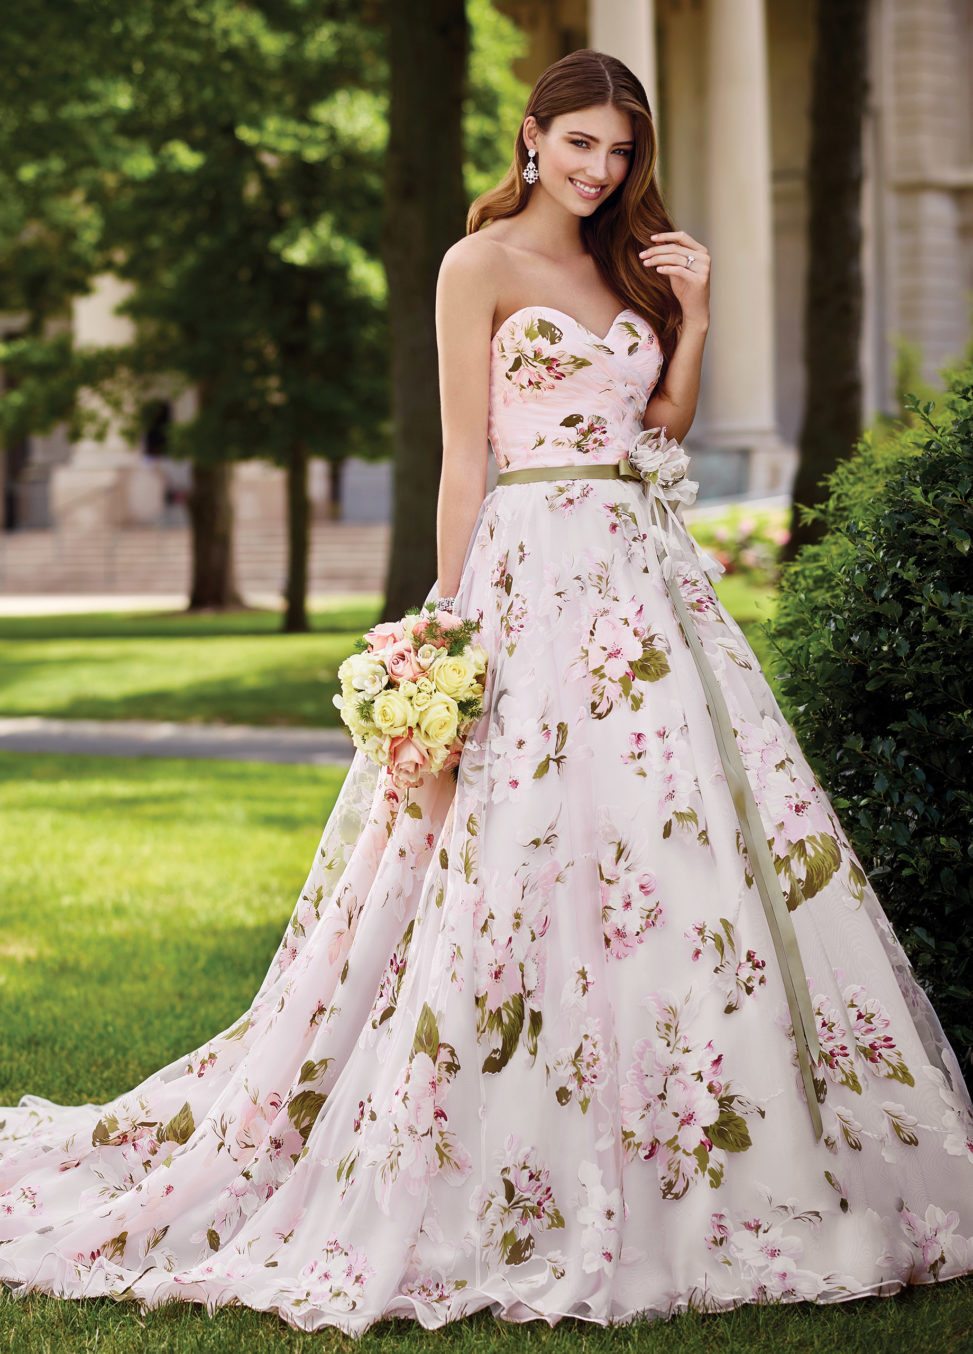 Wedding Dress Martin Thornburg 117283 "Orabelle", available in sizes 0-20, 18W-26W